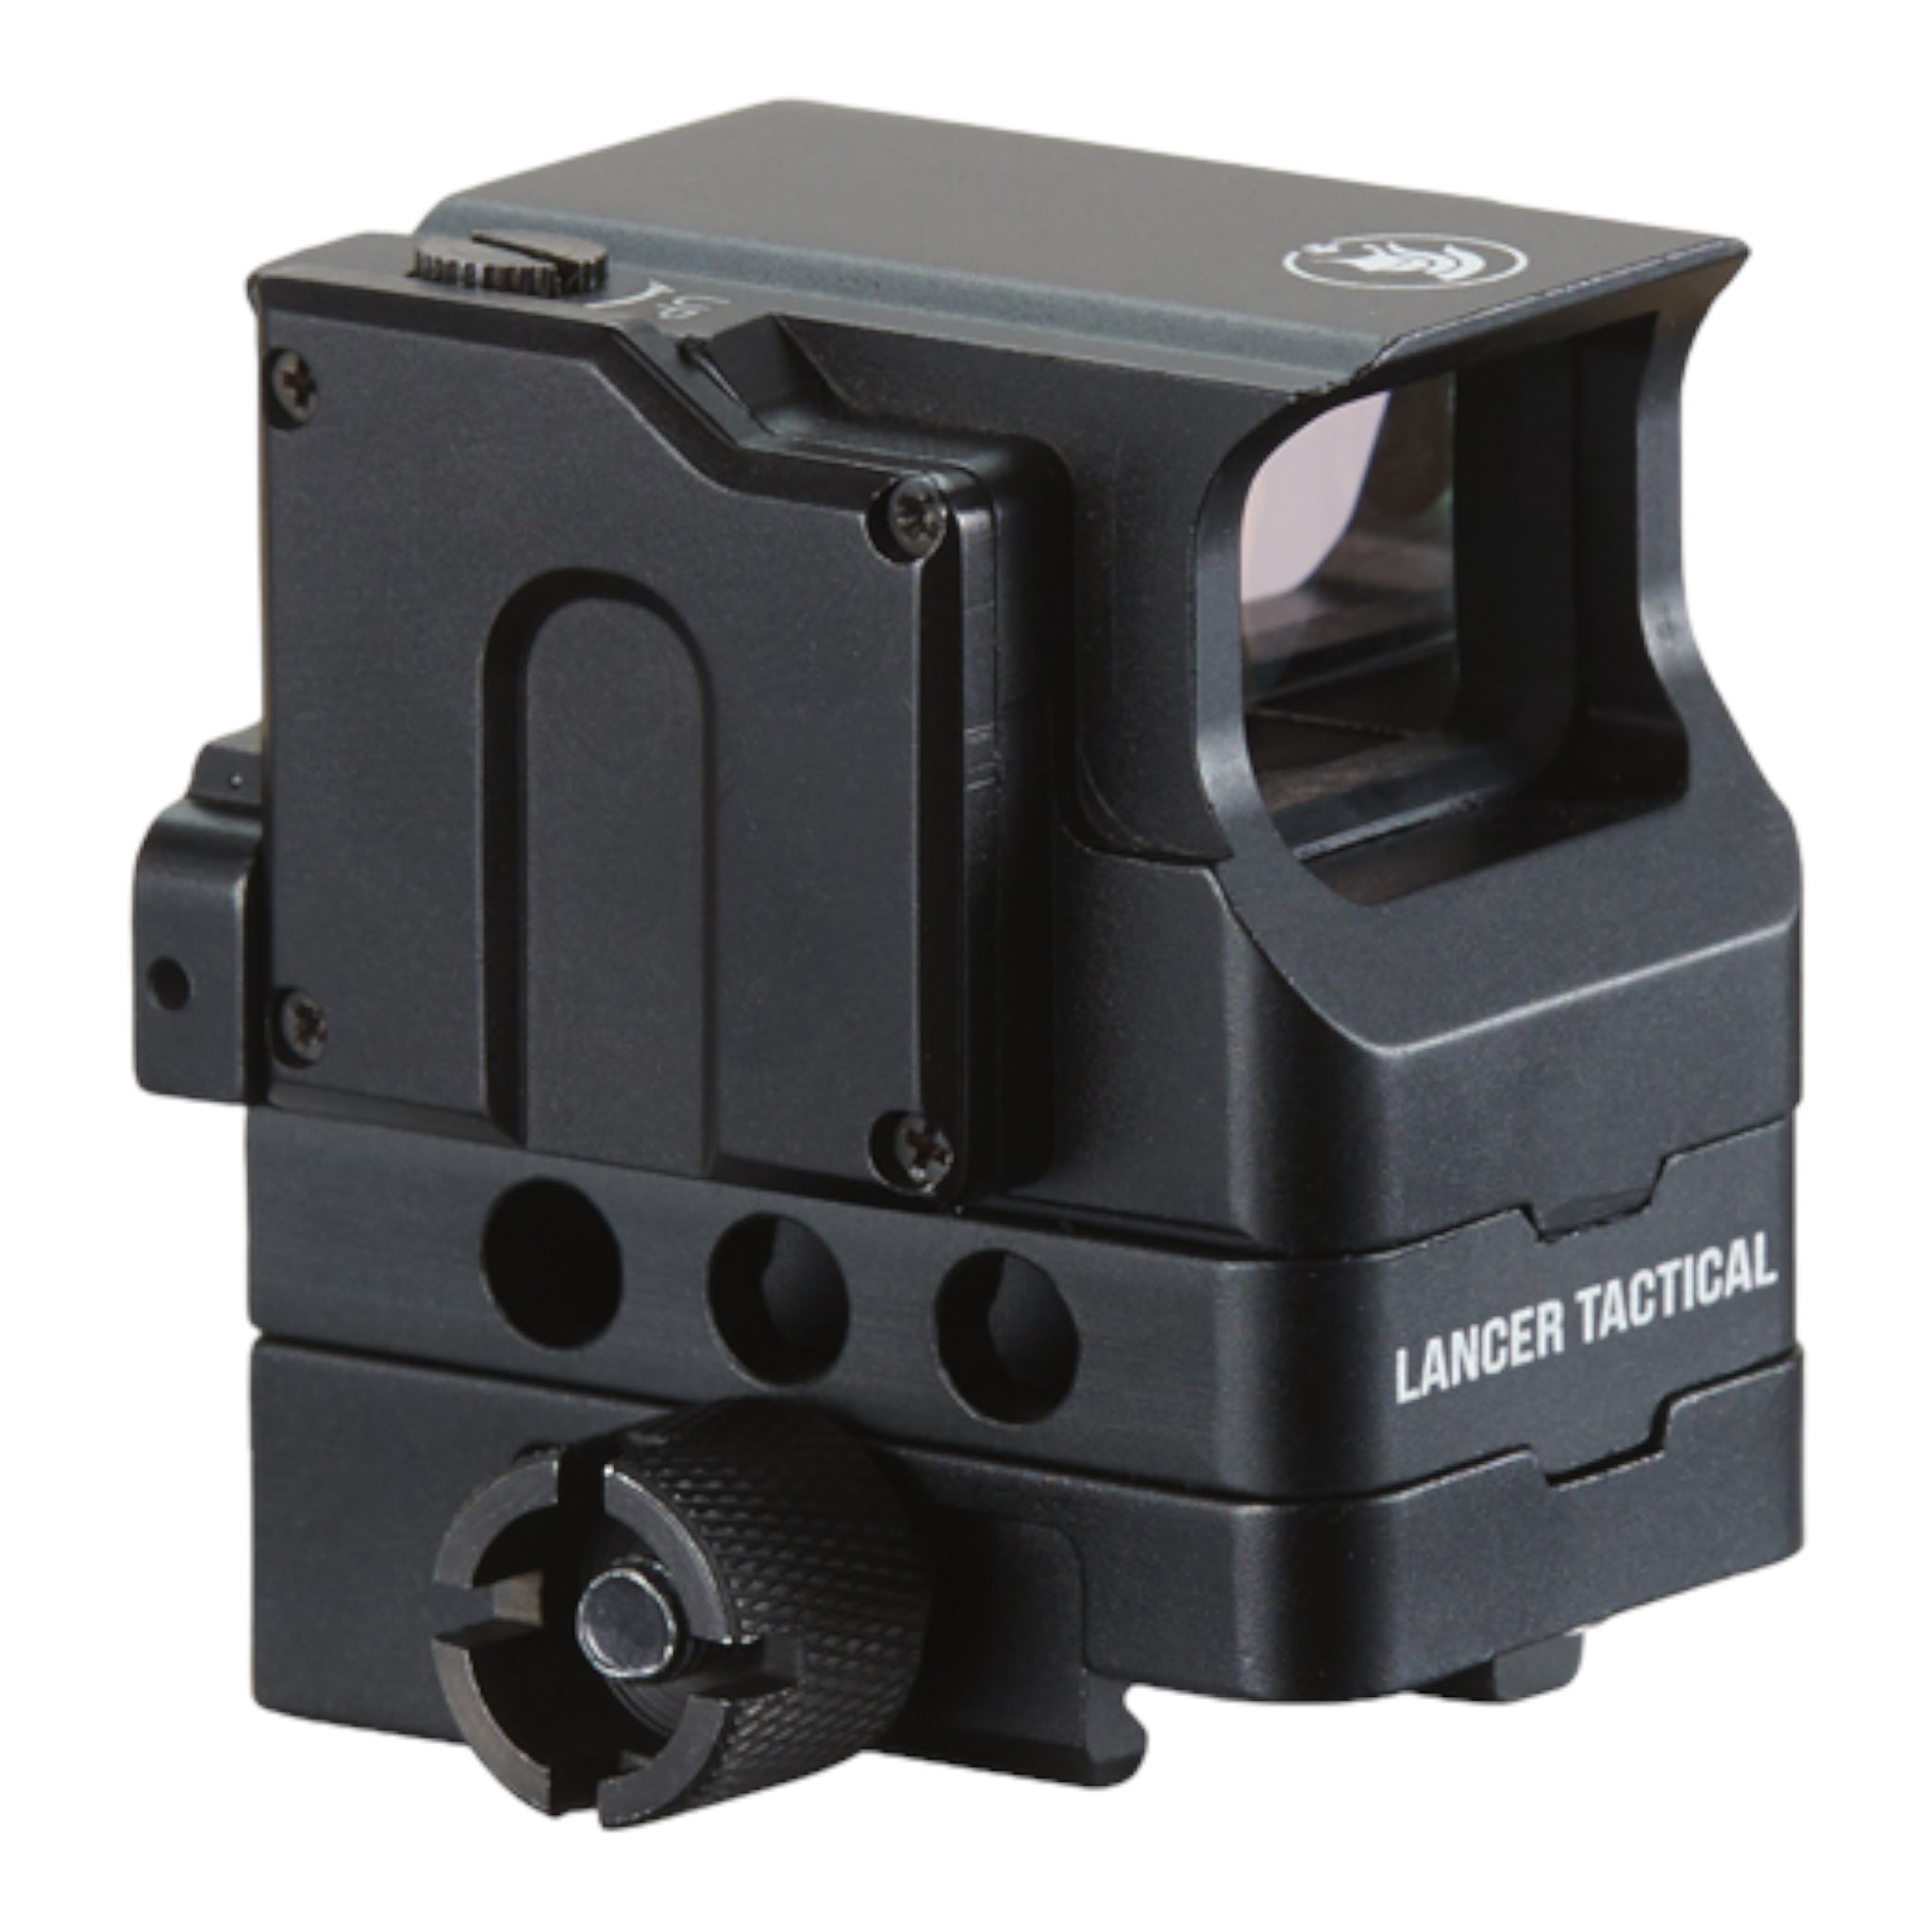  Lancer Tactical 1 x 30 2MOA Mi-cro Red Dot Sight 1x25mm Reflex  Sight Waterproof & Shockproof & Fog-Proof Red Dot Scope, Mini Riflescope  with 1 inch Riser Mount, Black. : Sports